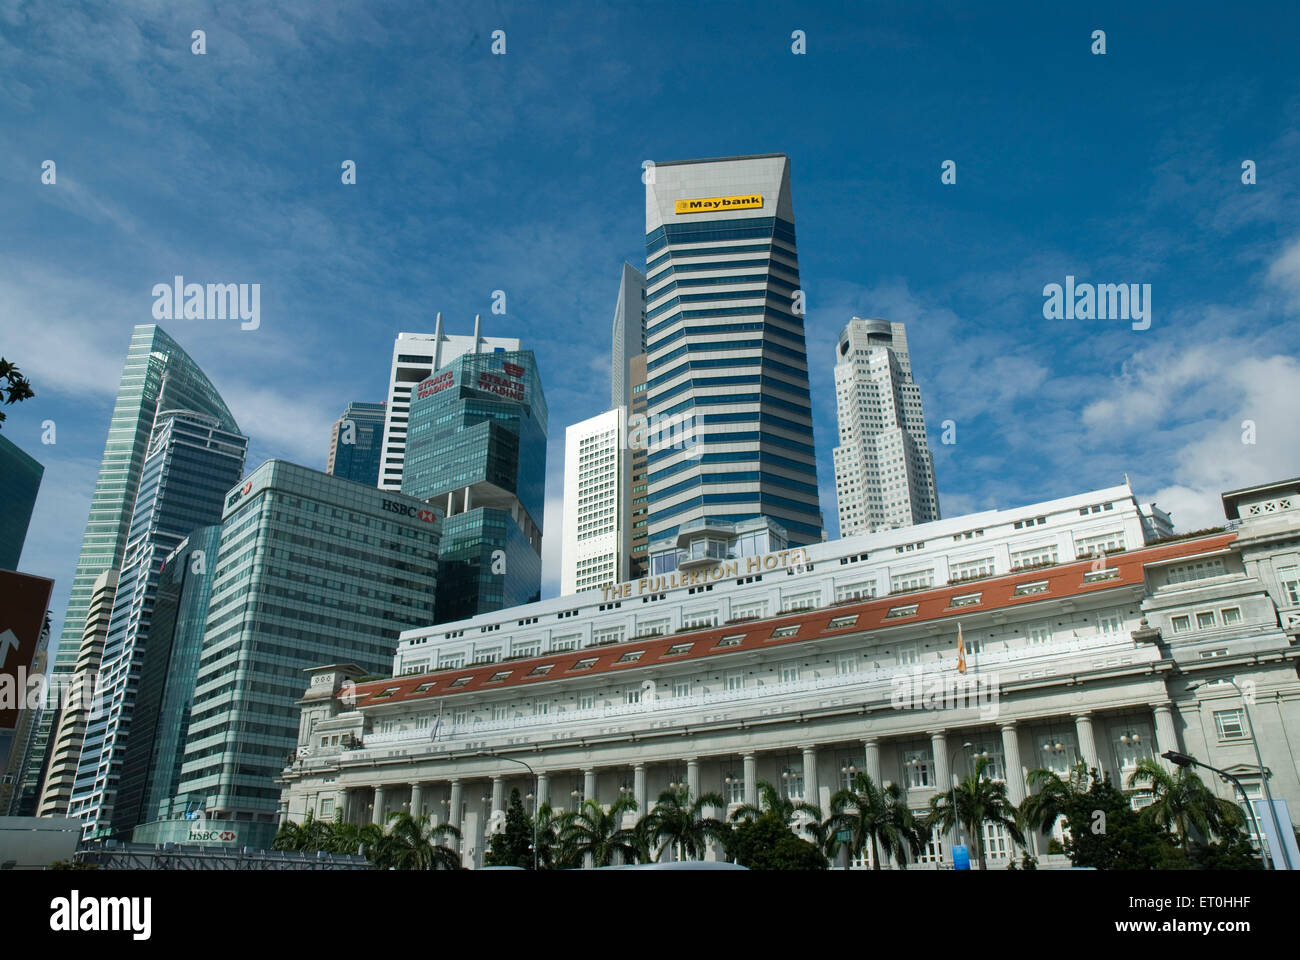 The Fullerton Hotel, Maybank building, HSBC bank building, Skyline, Singapore, Asia Stock Photo